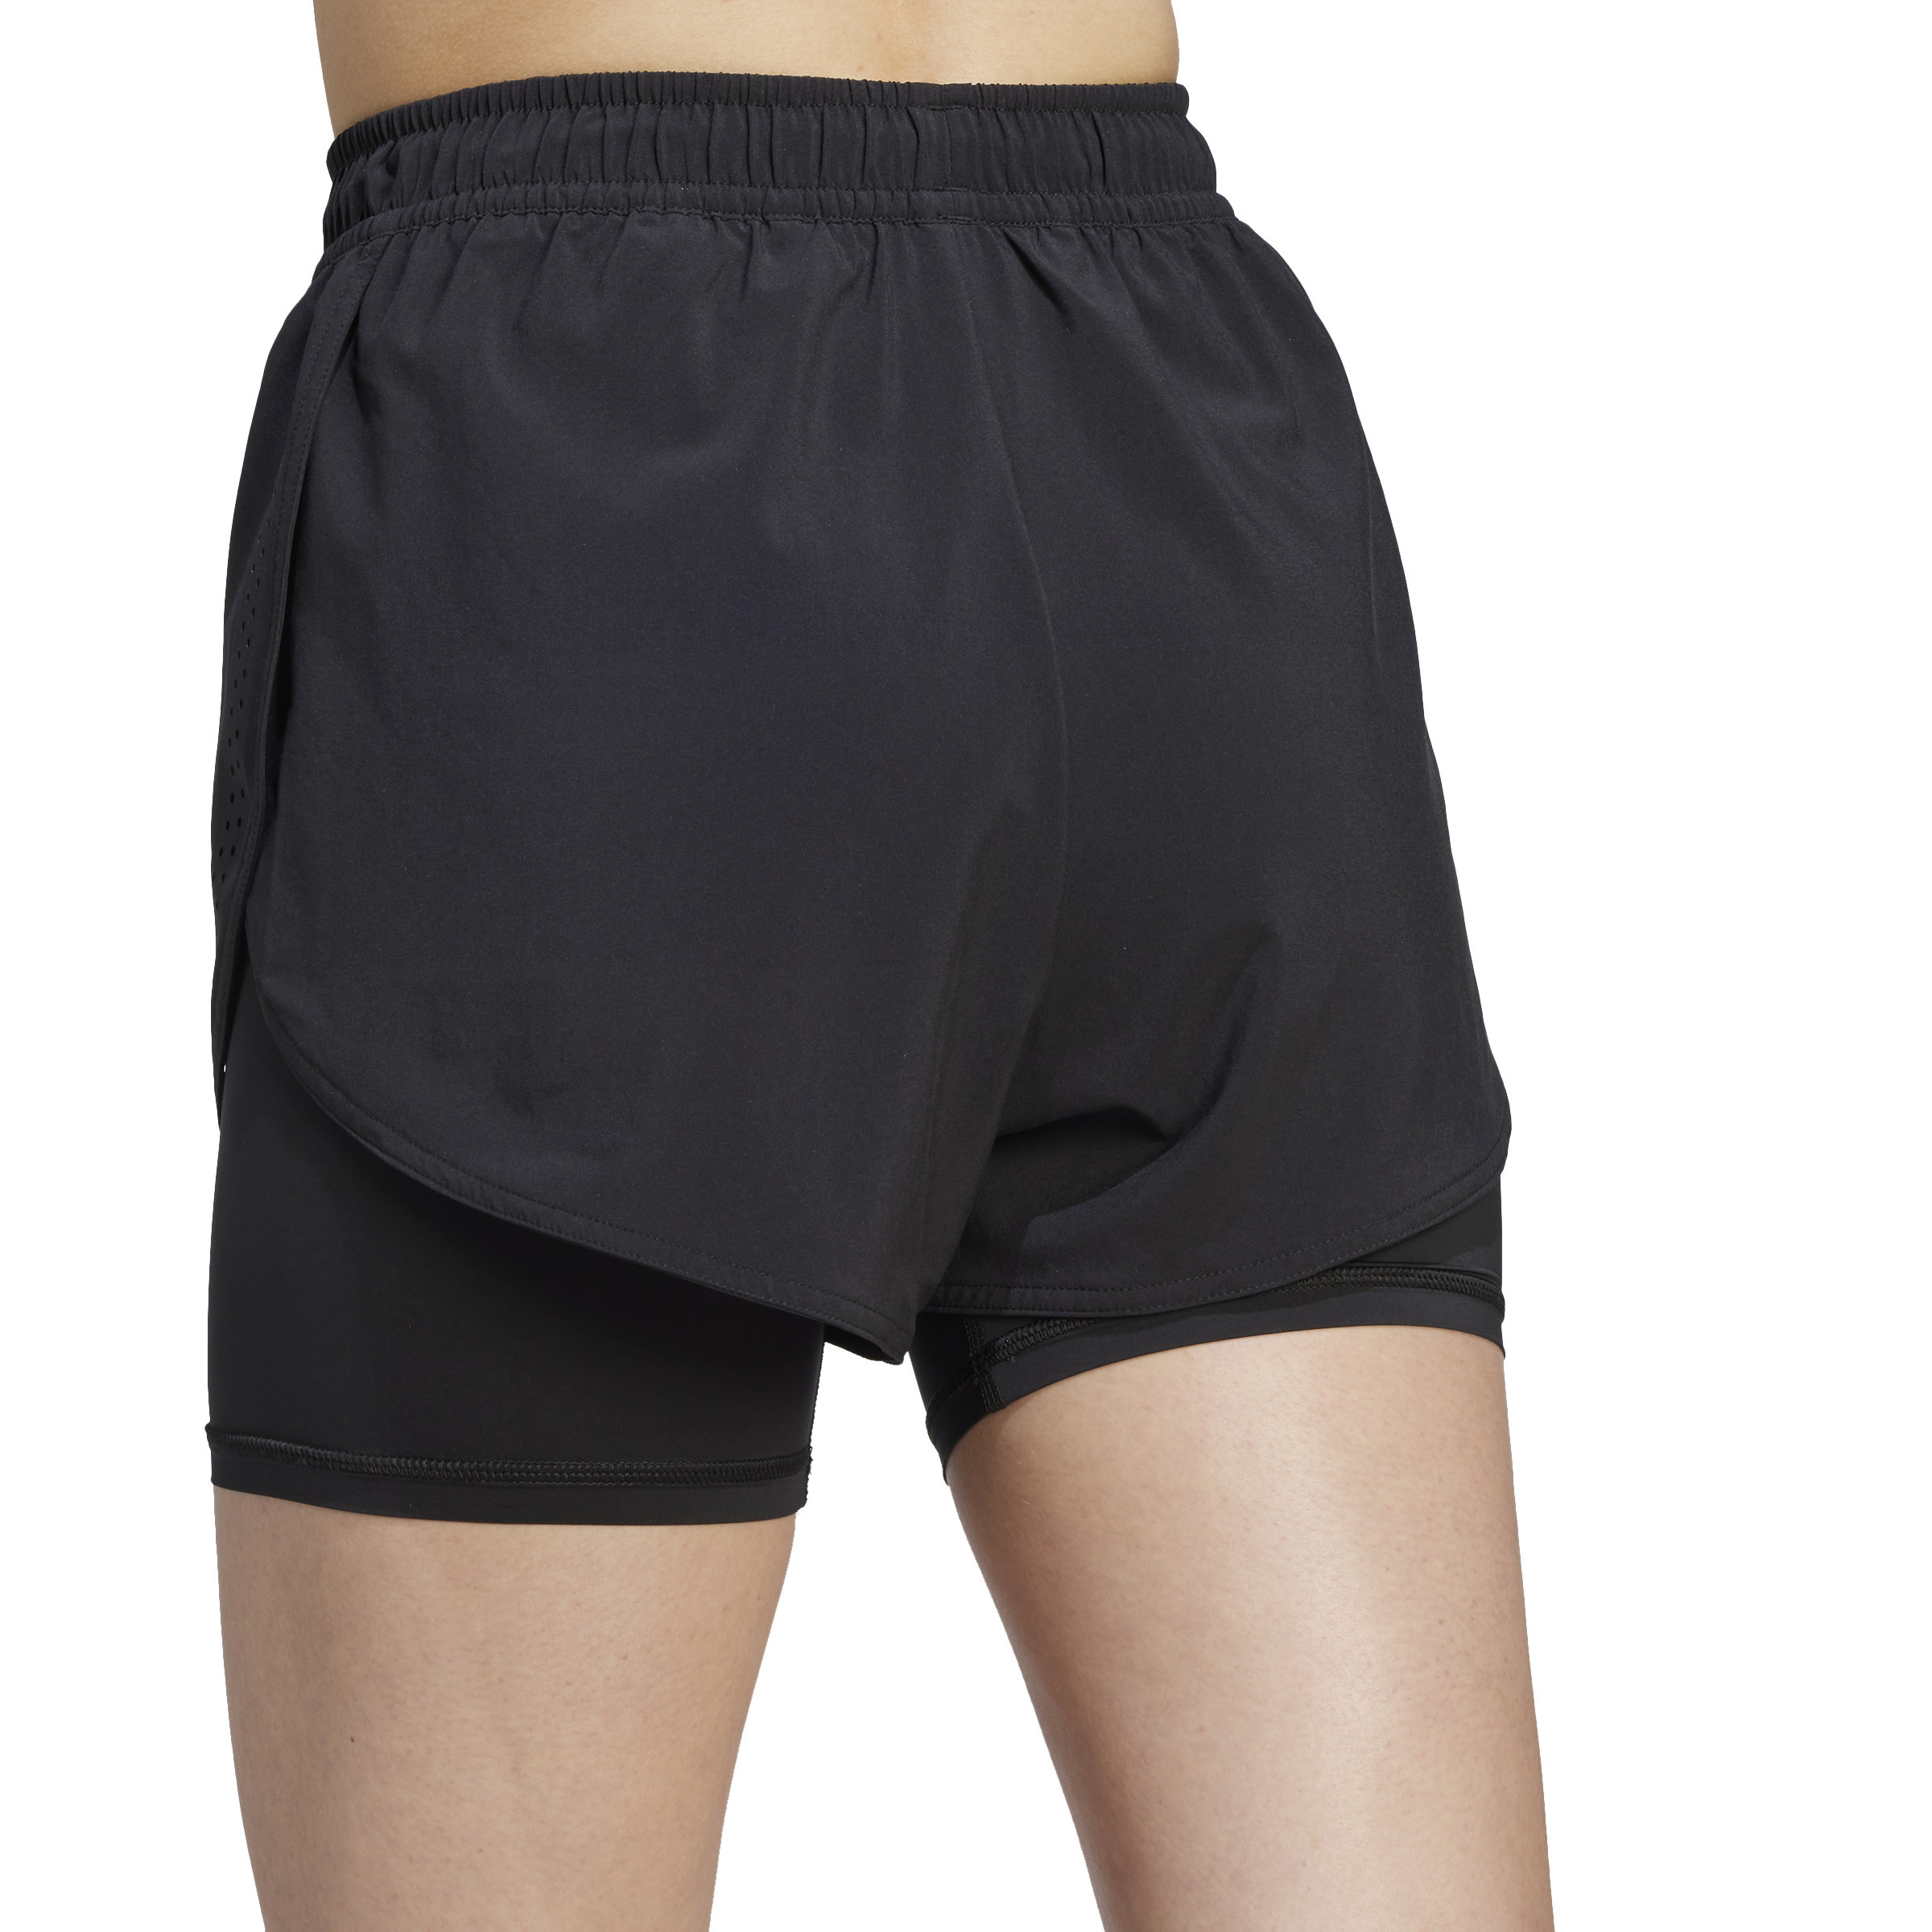 Adidas by Stella McCartney - TruePurpose 2-in-1 Training Shorts, Black, large image number 4